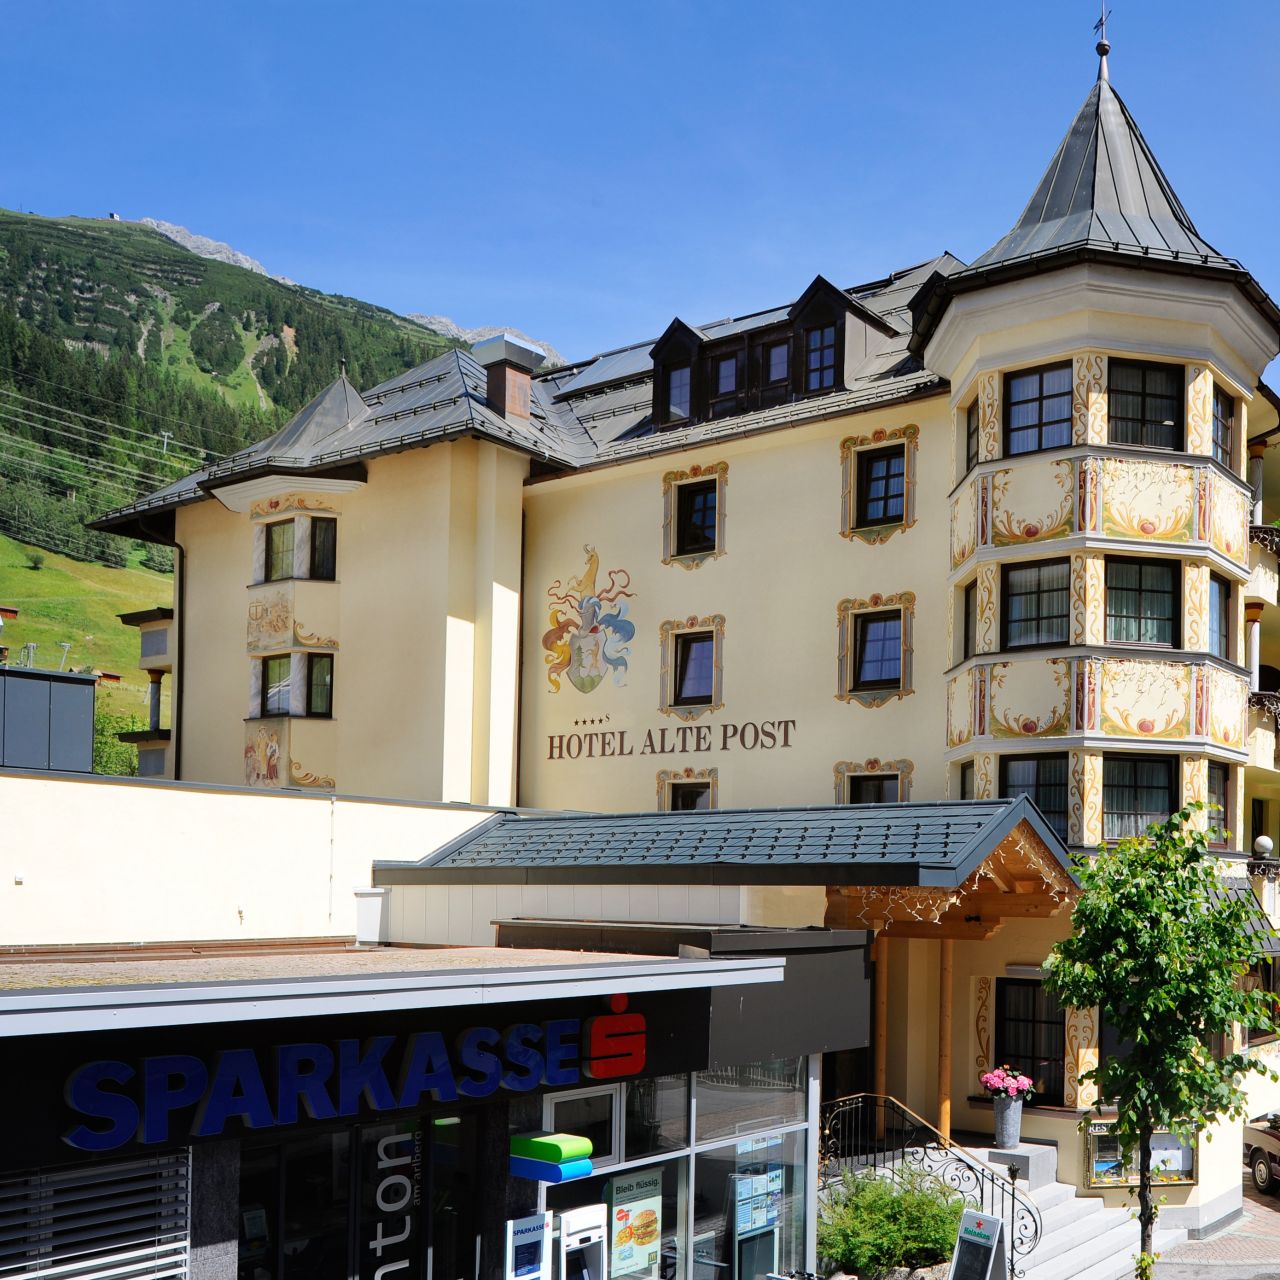 Hotel Alte Post Wellness & Beauty - St. Anton am Arlberg - HOTEL INFO